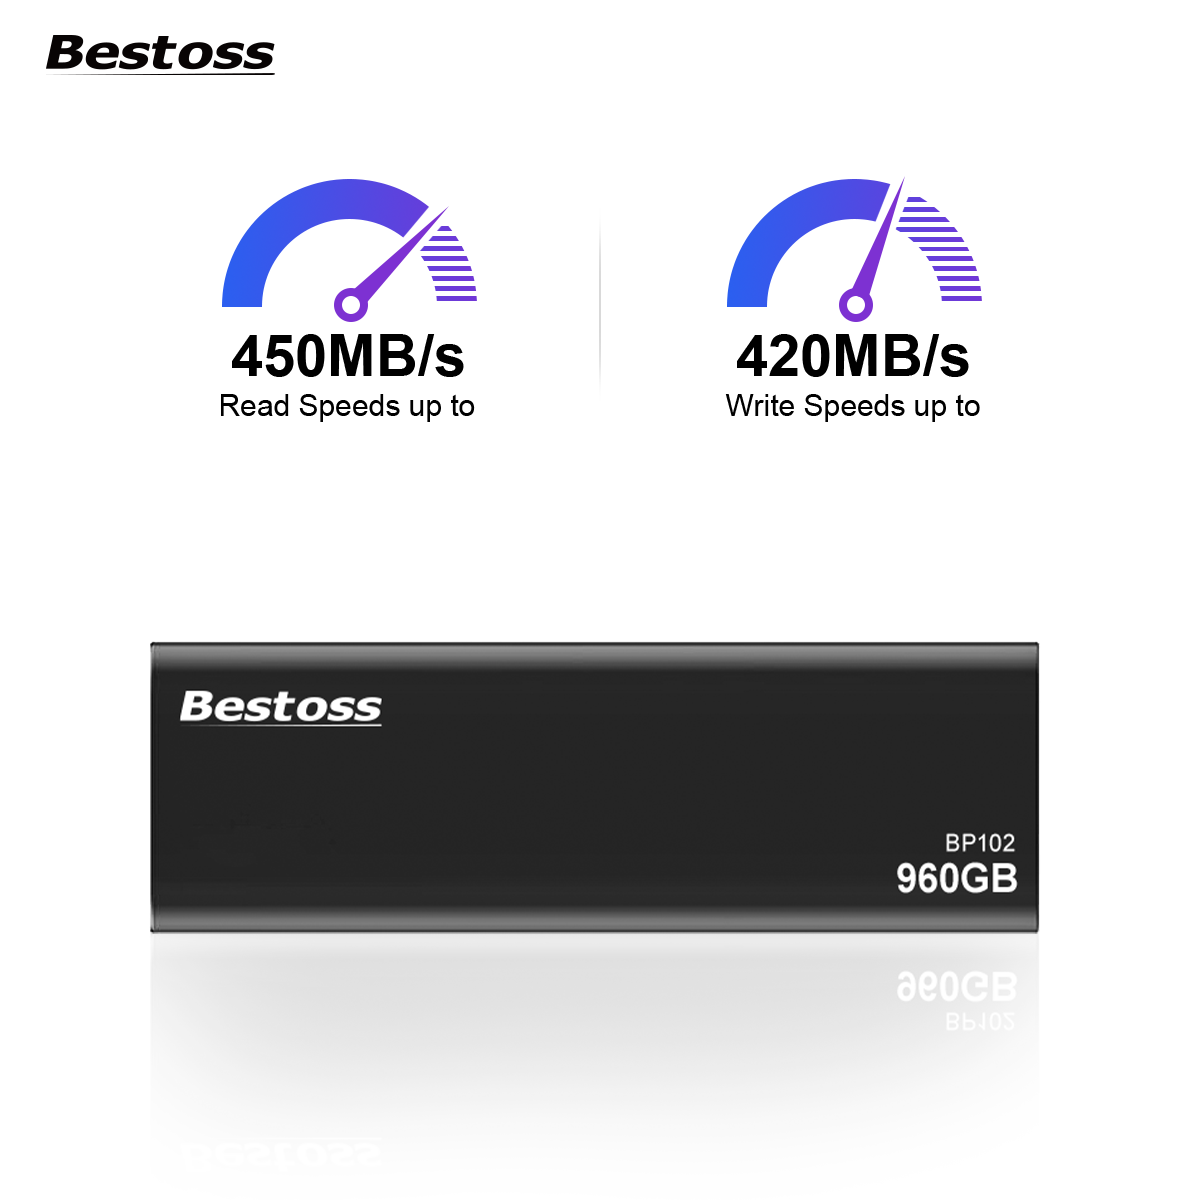 BP102 512GB External SSD